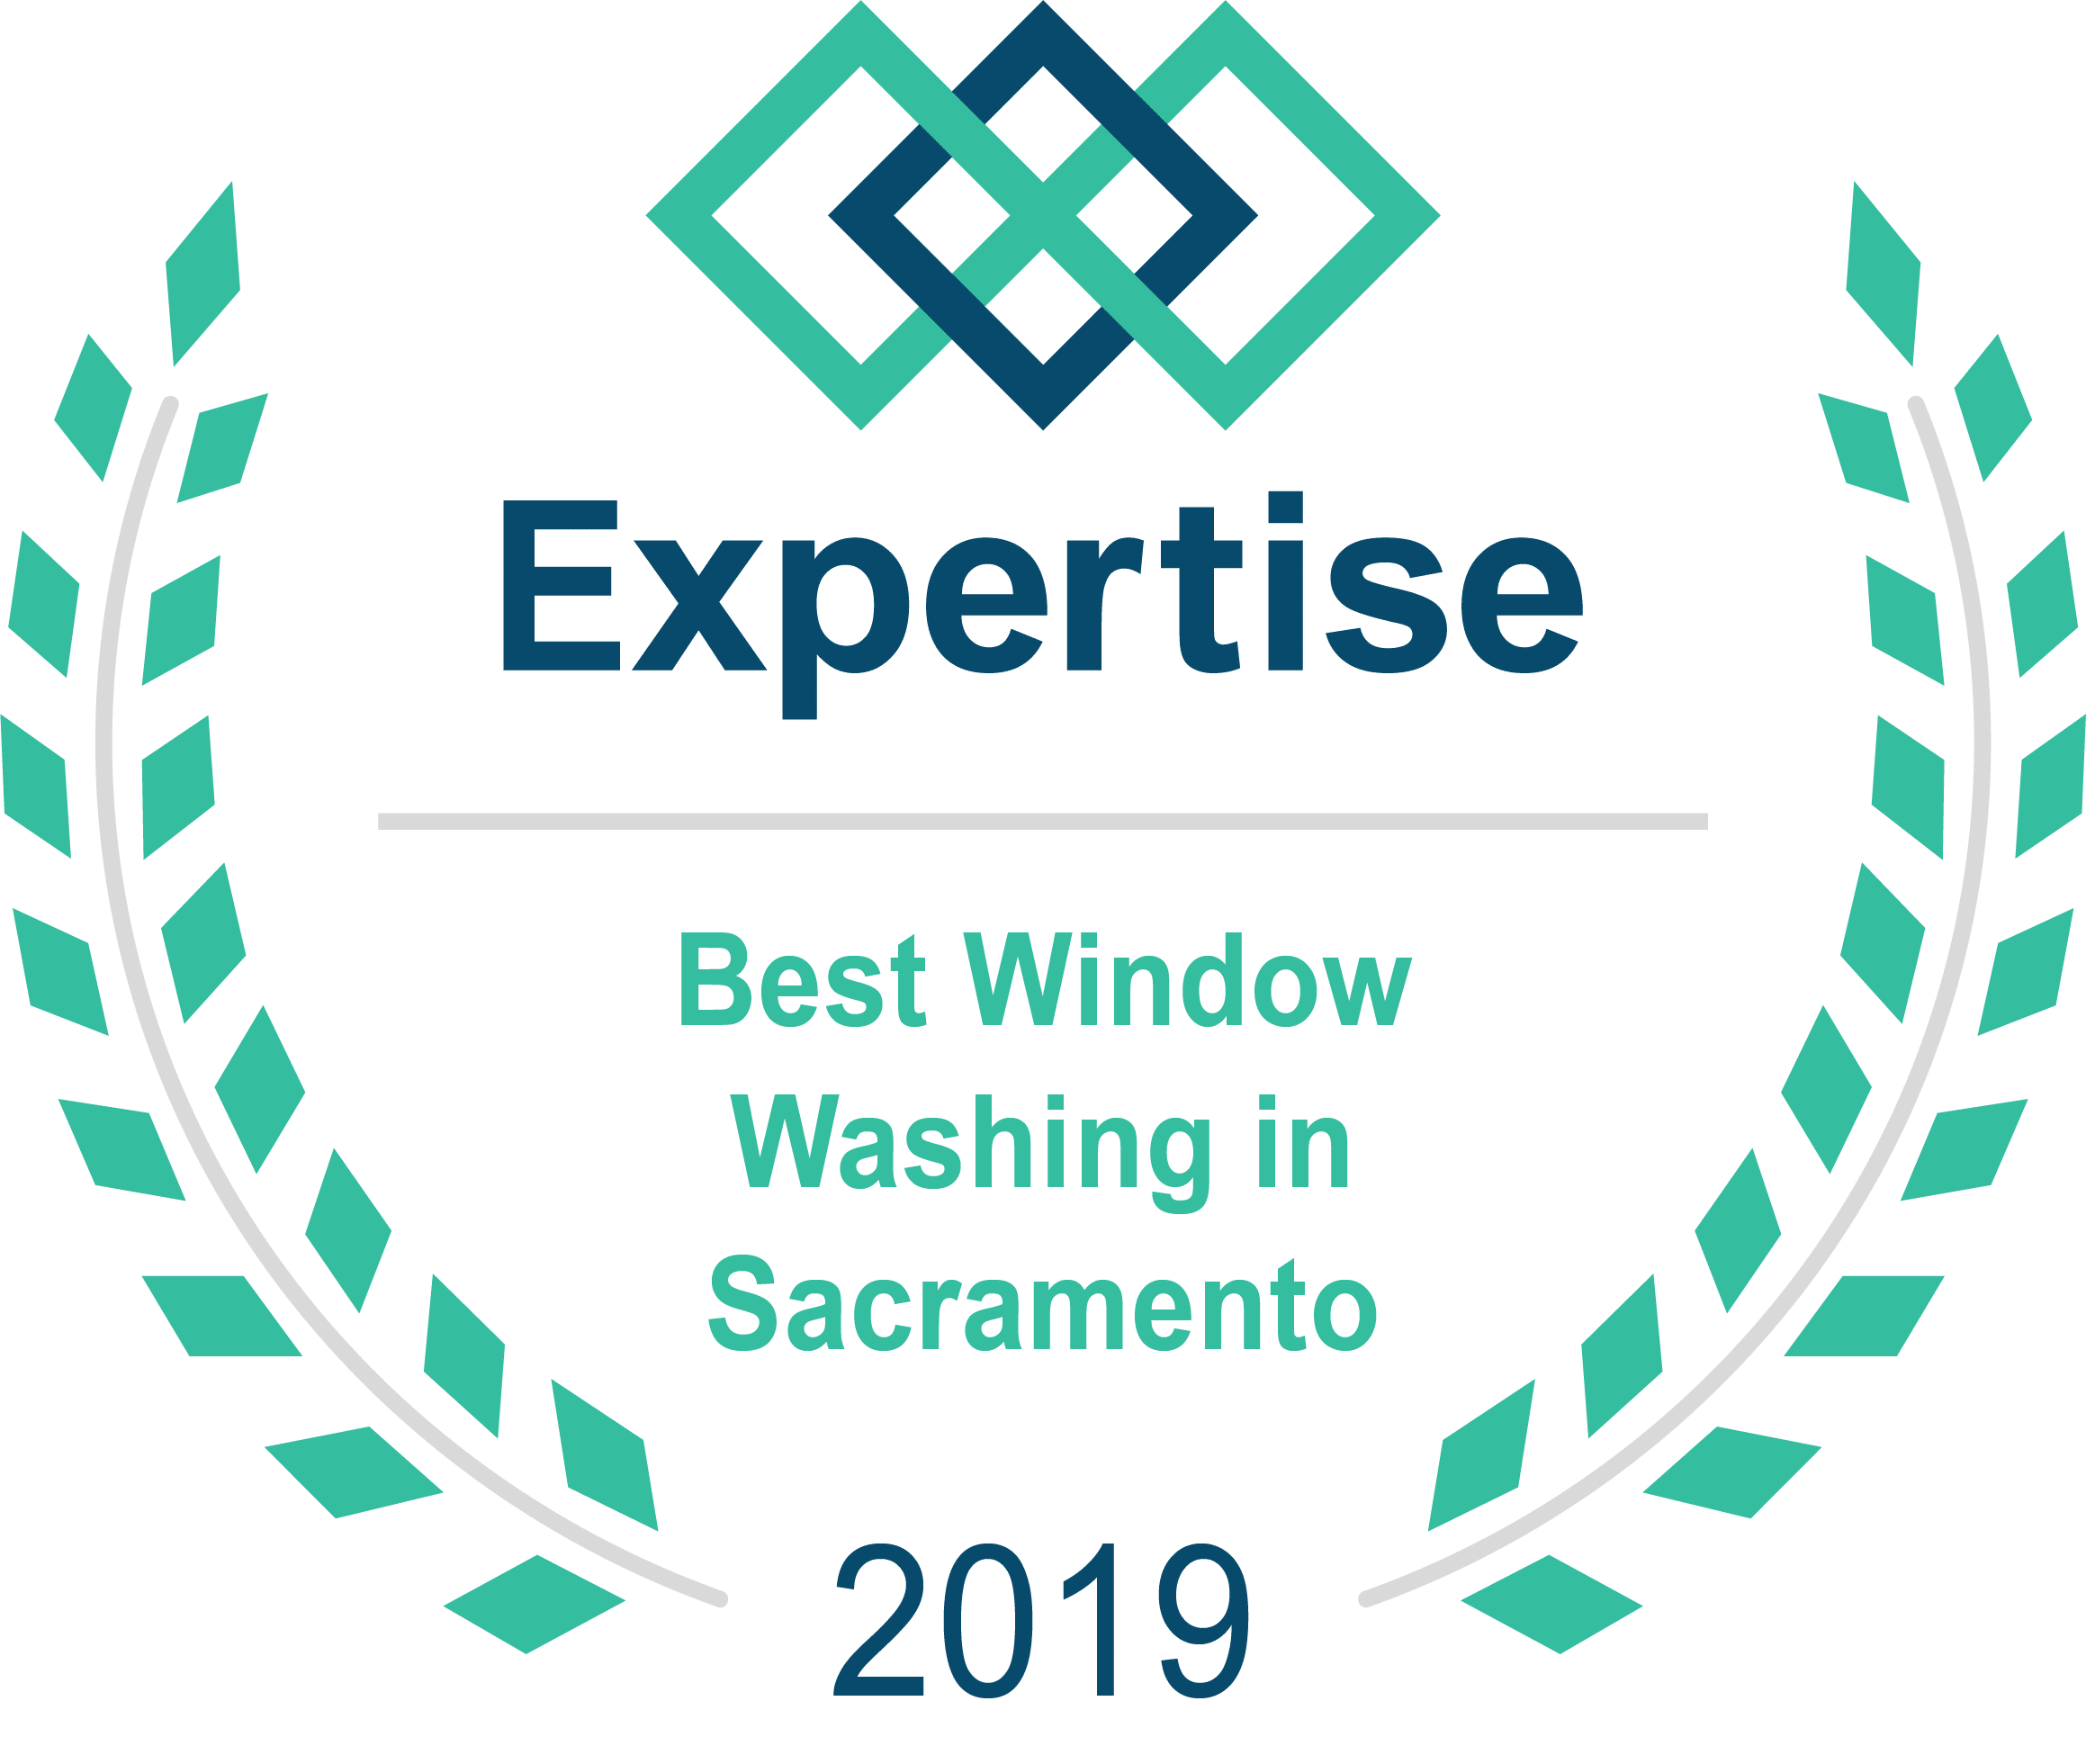 Expertise Best Window Washing in Sacremento 2019 Award